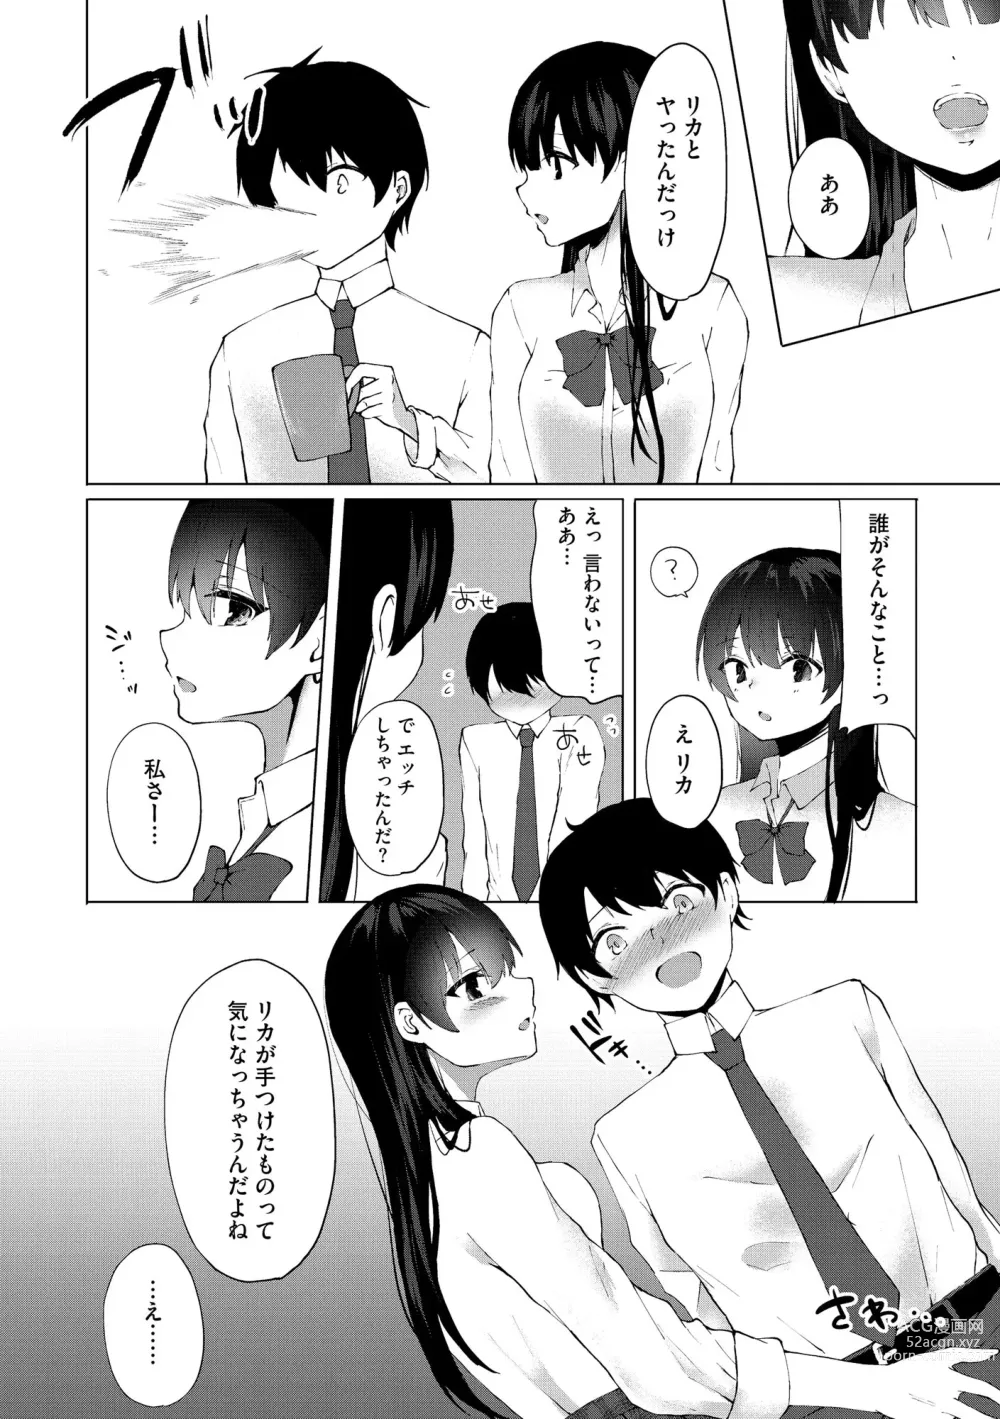 Page 10 of manga Cyberia Plus Vol. 12